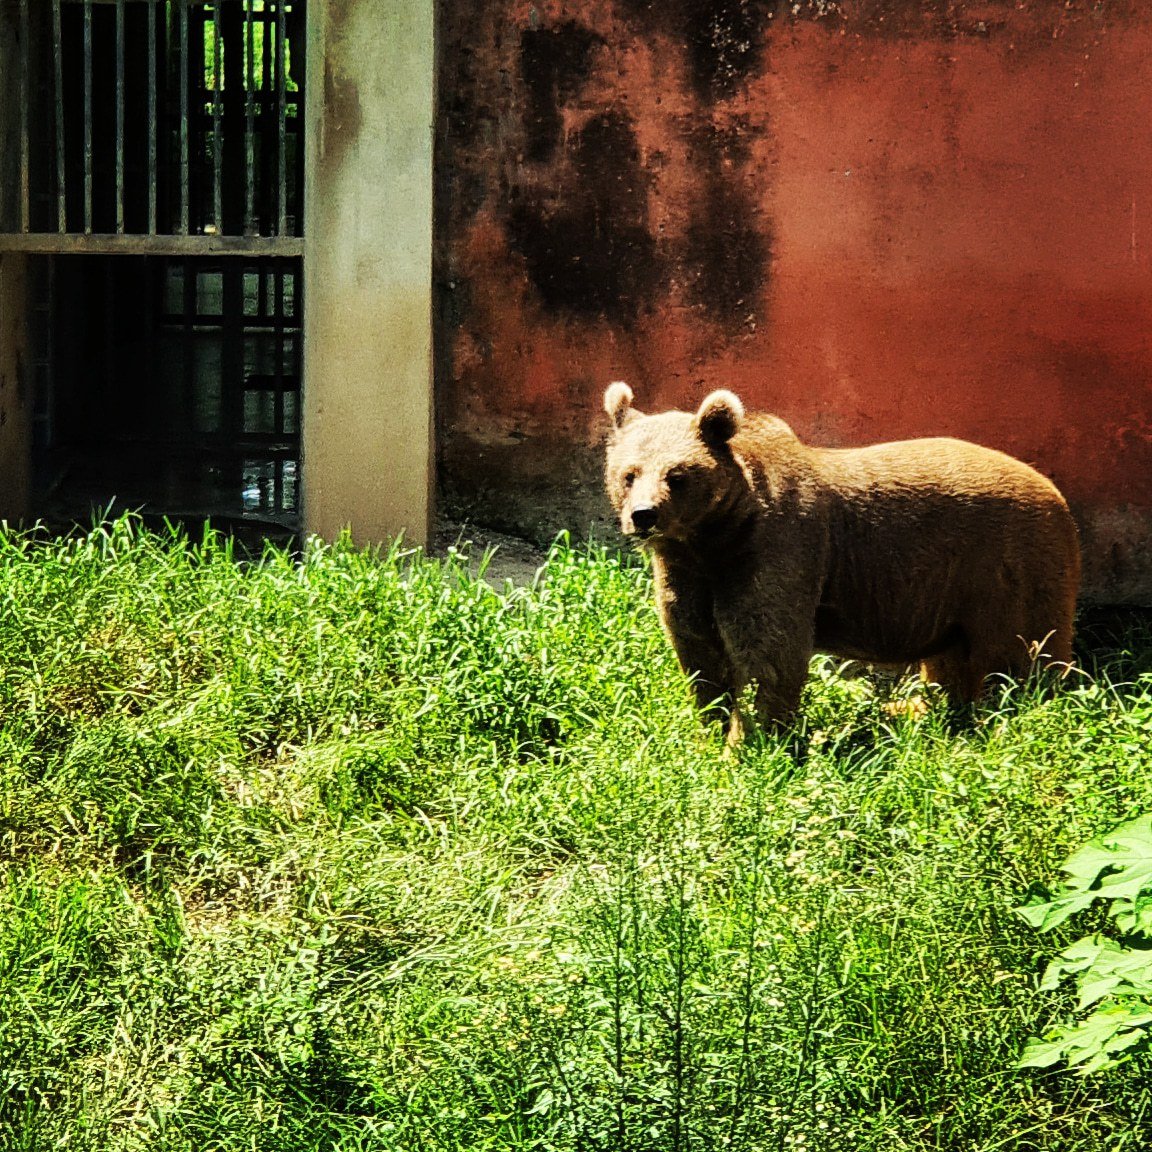 The male brown bear at Islamabad Zoo [Image by: Muhammad Bin Naveed]